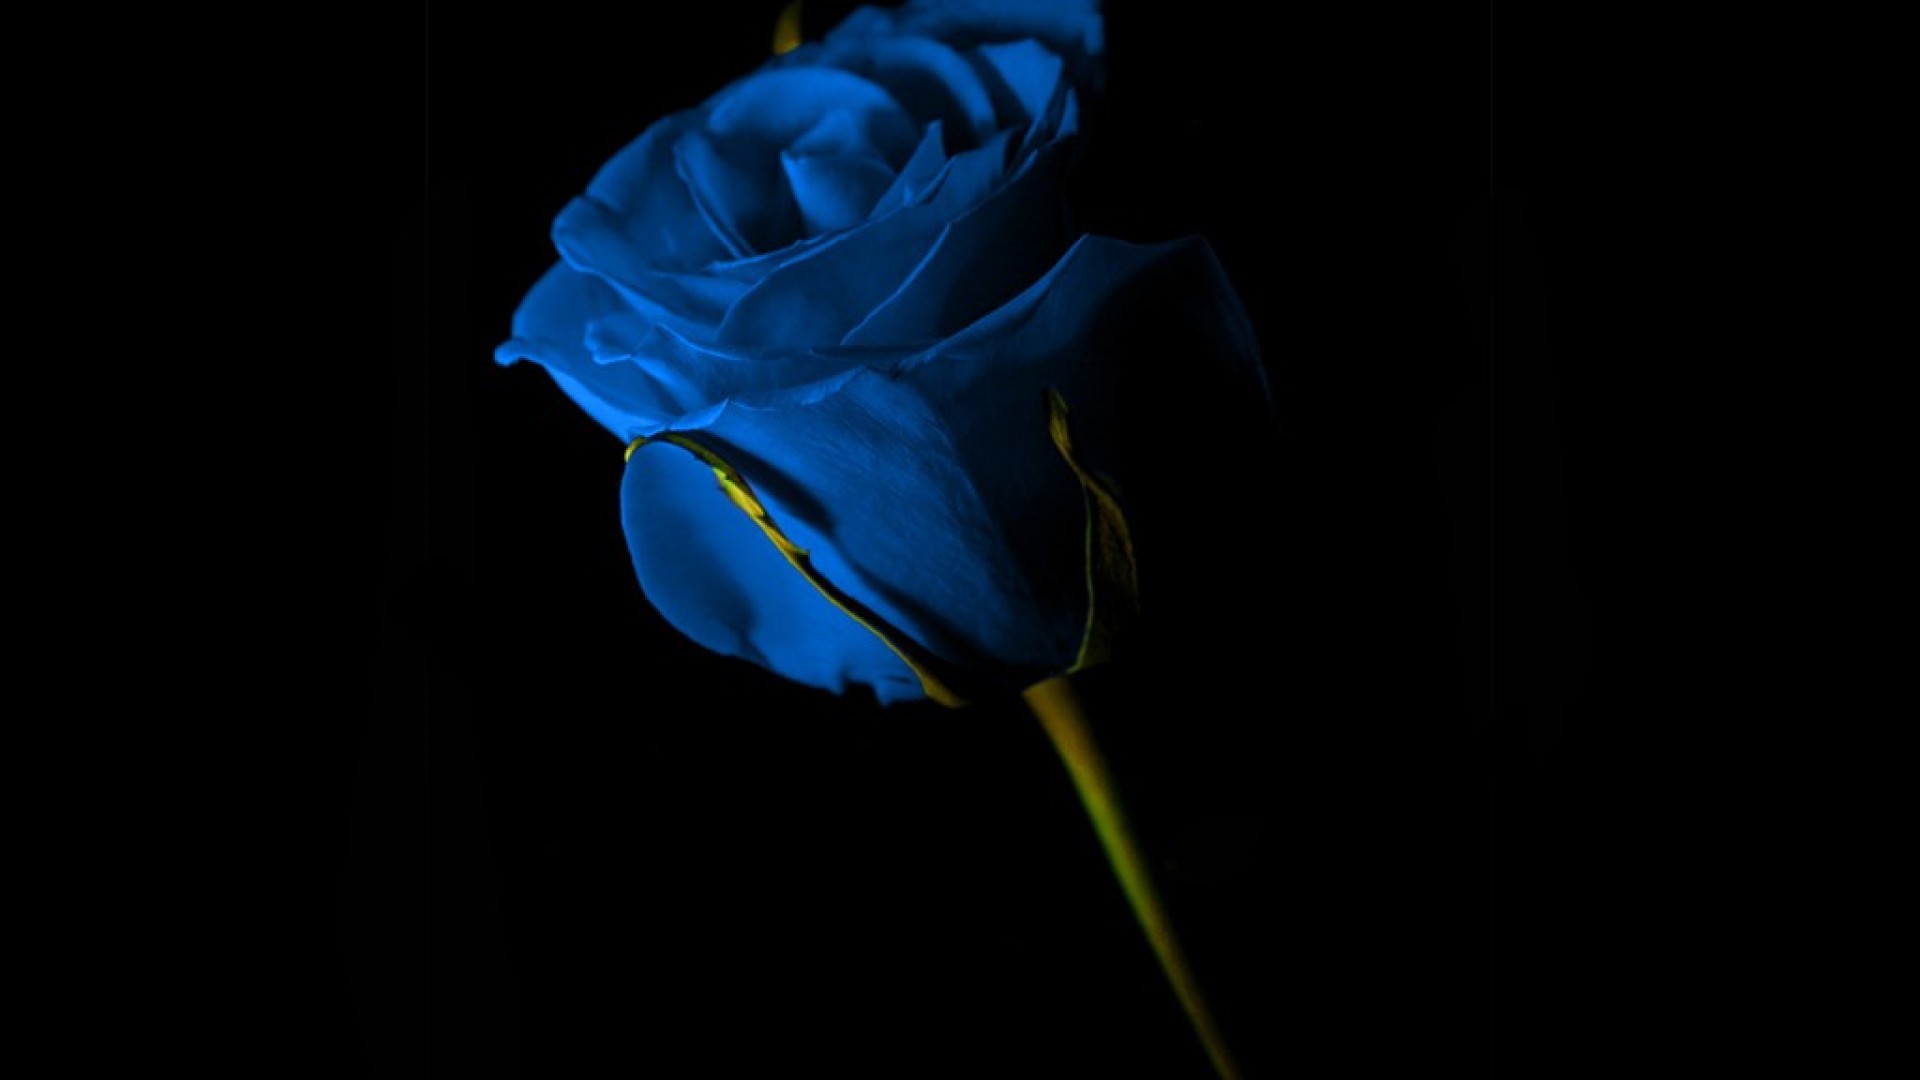 Blue Rose On Black Background Wallpaper And Image